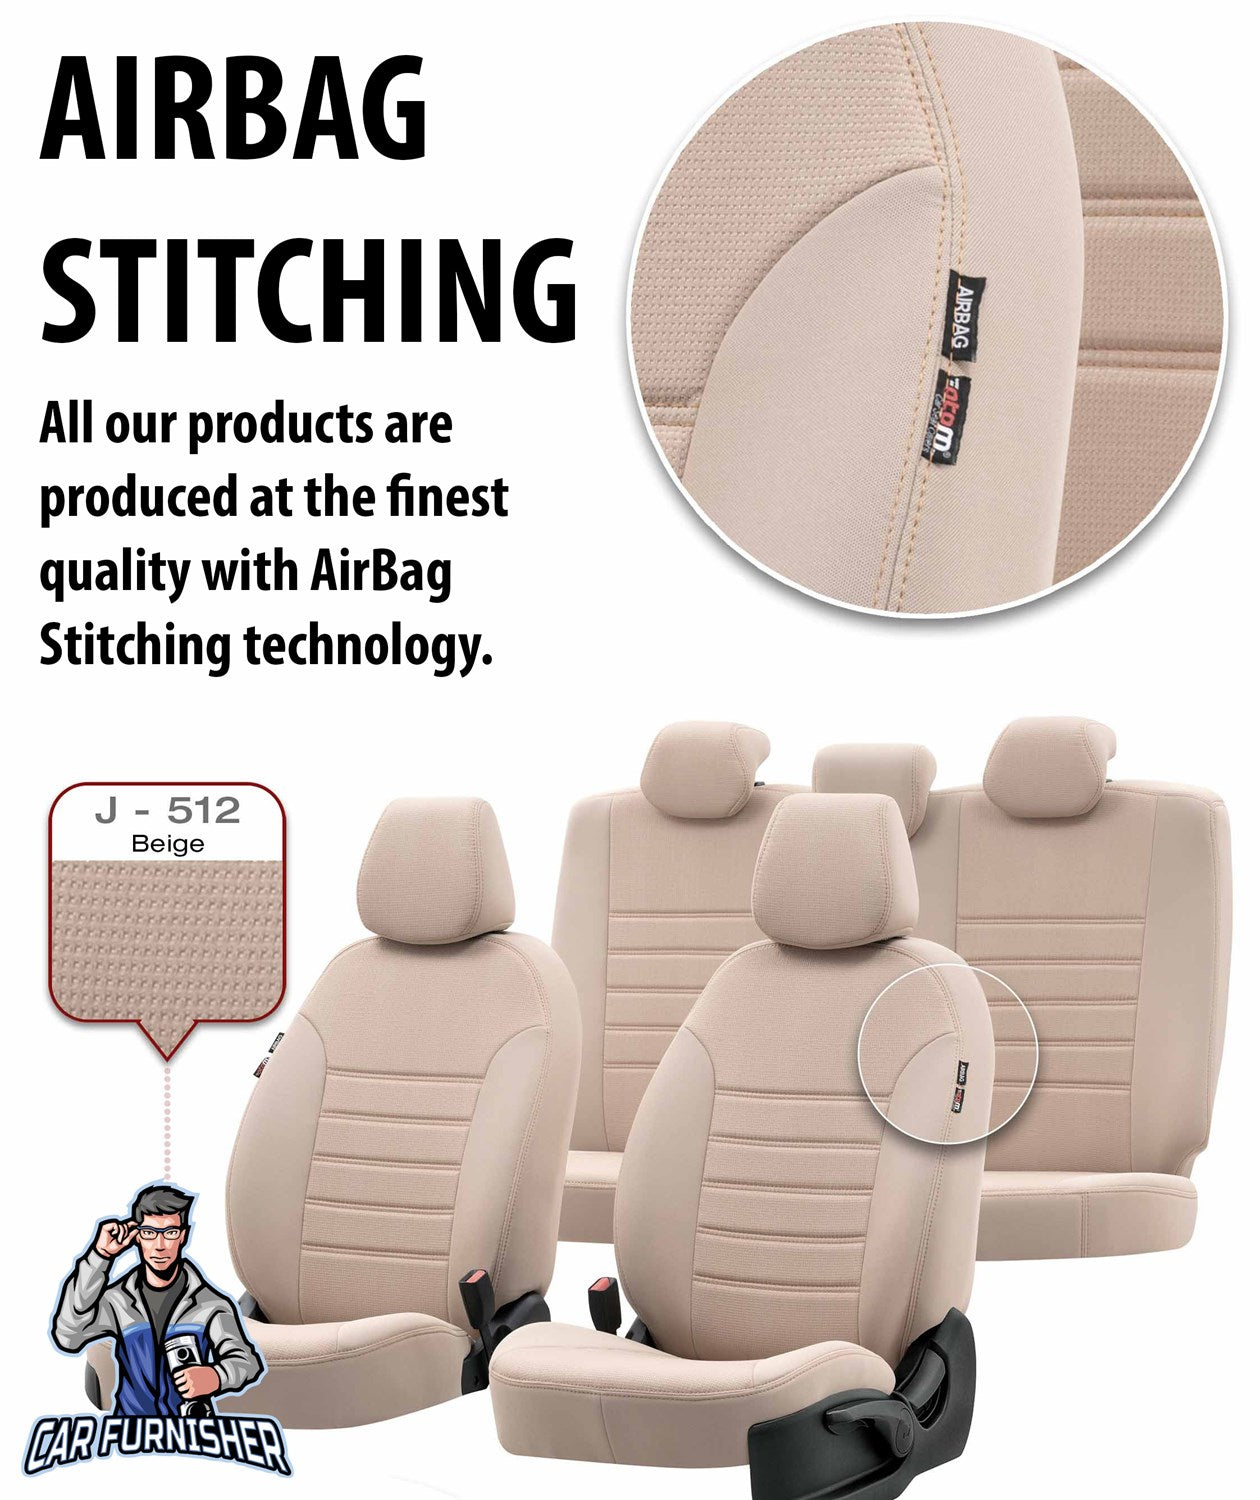 Kia Bongo Seat Covers Original Jacquard Design Gray Jacquard Fabric